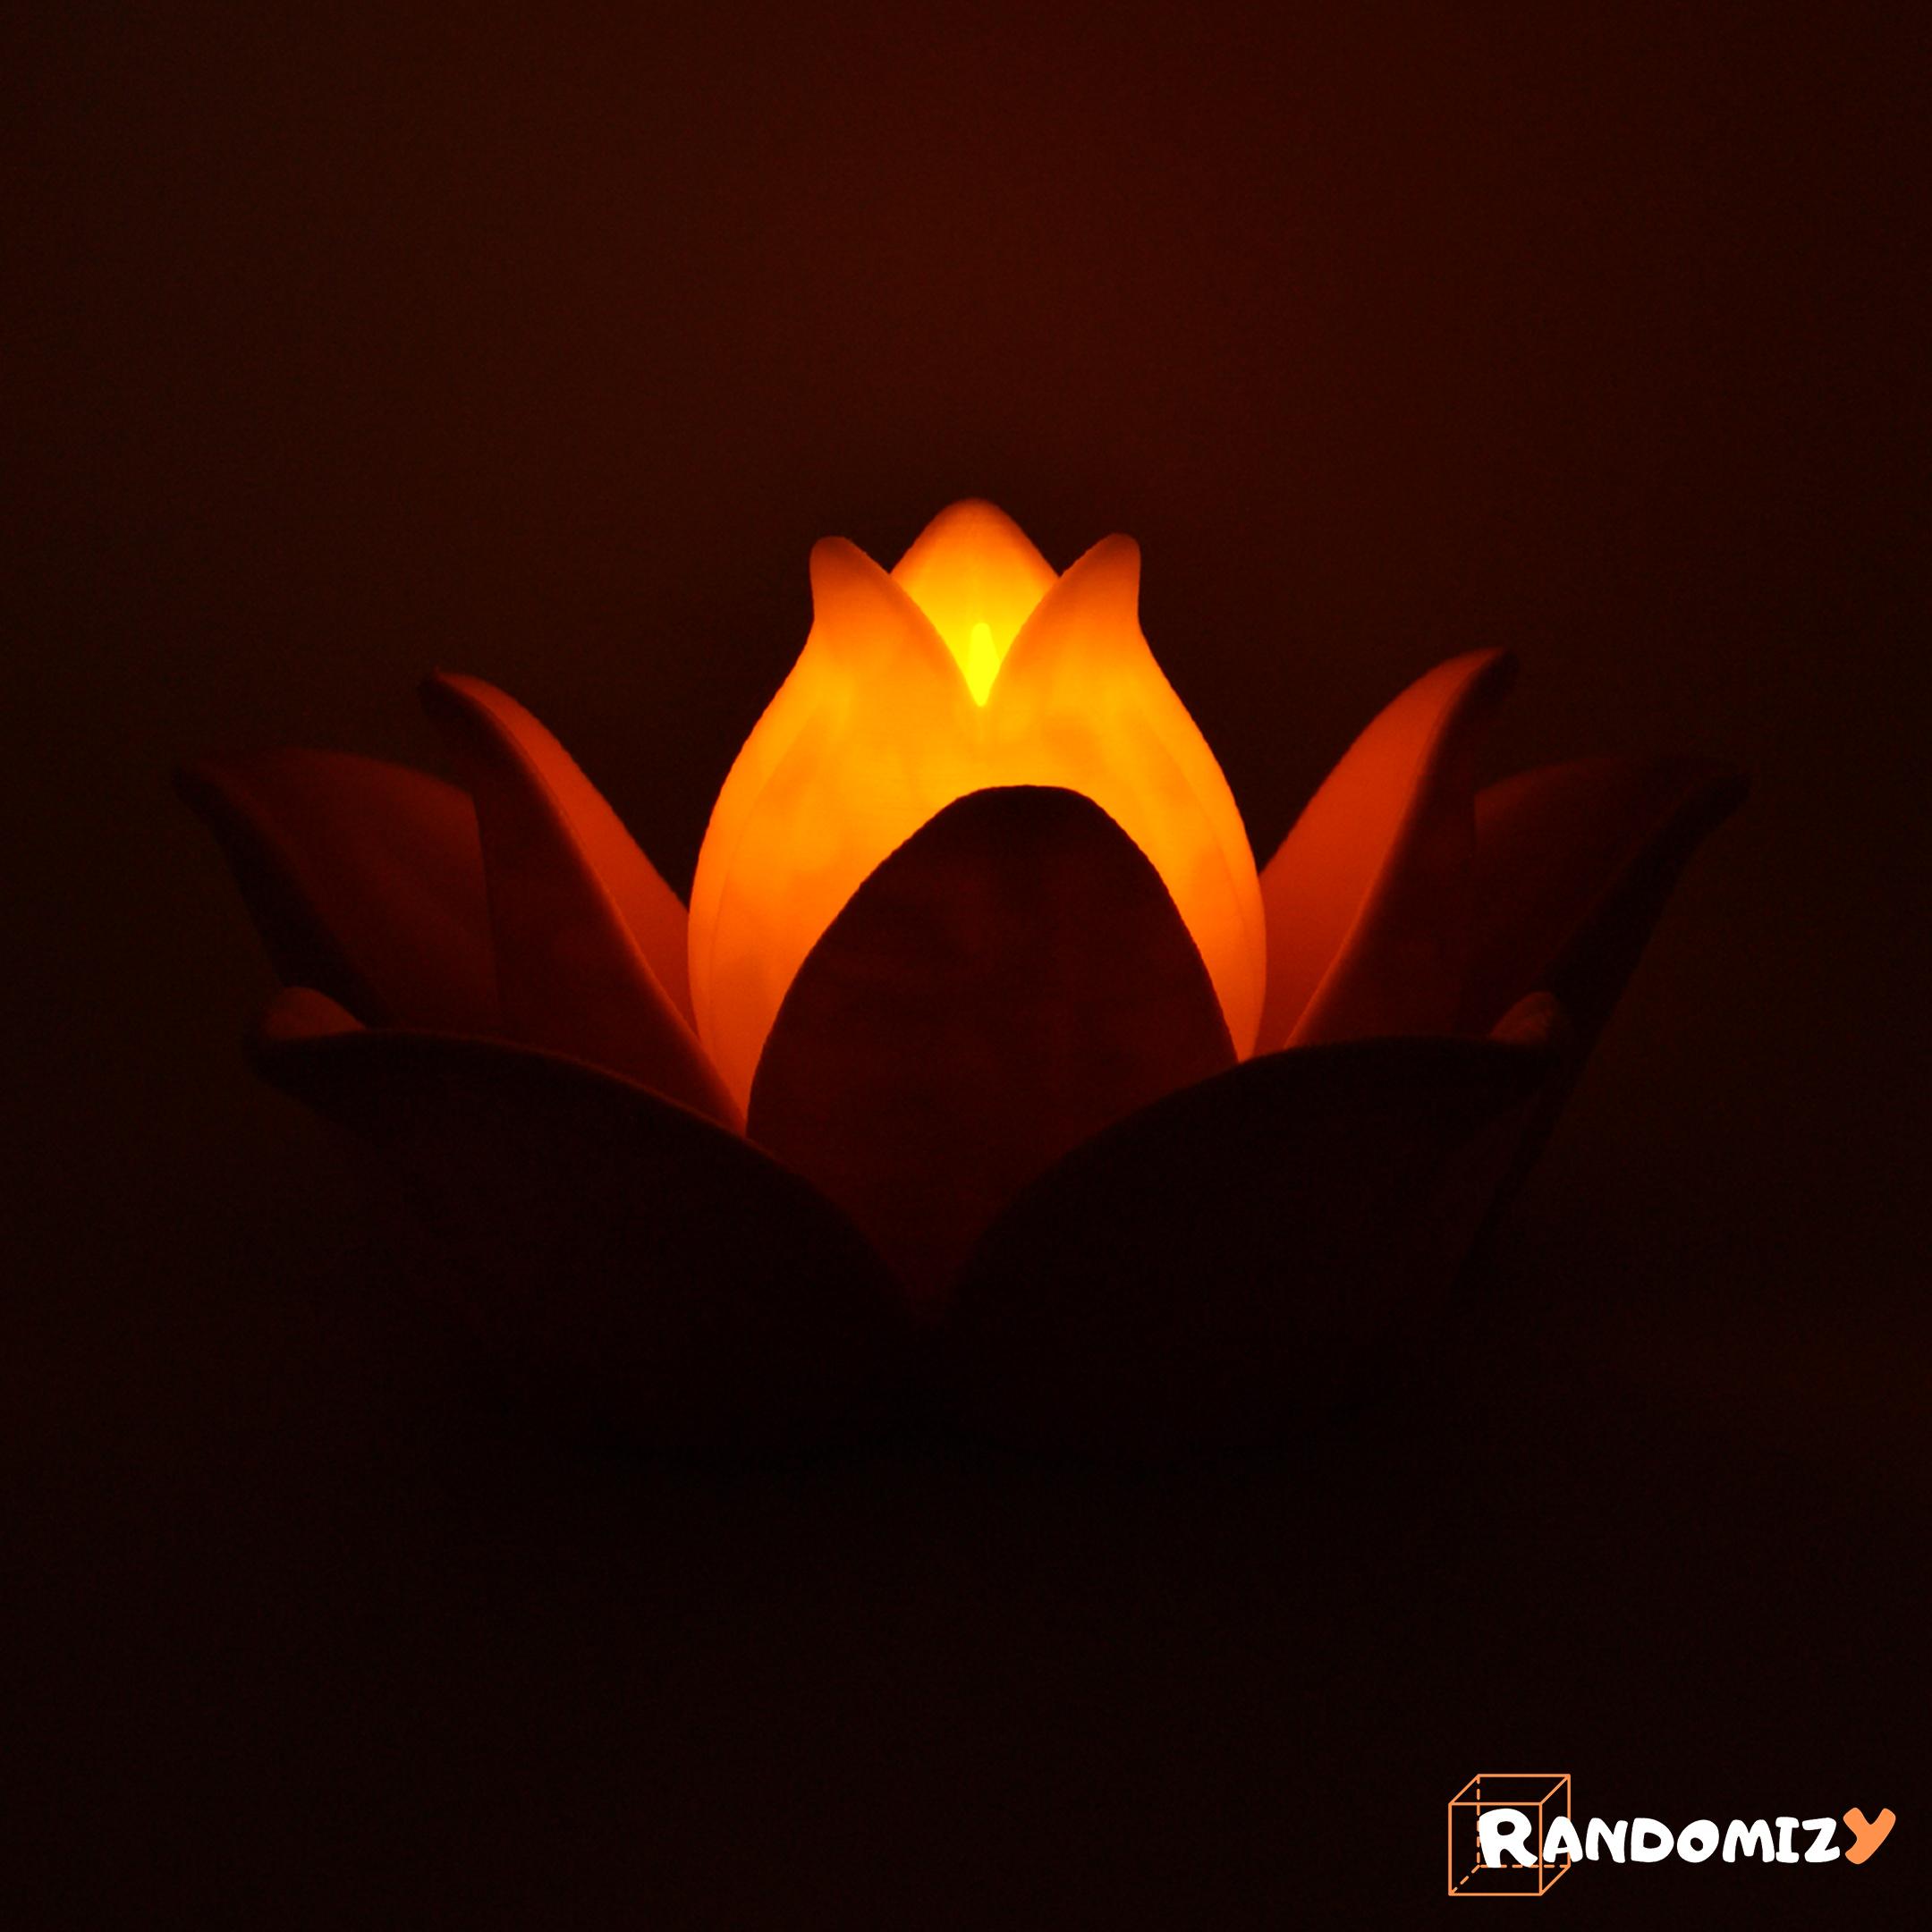 (Multifunctional) Lotus Flower 3d model